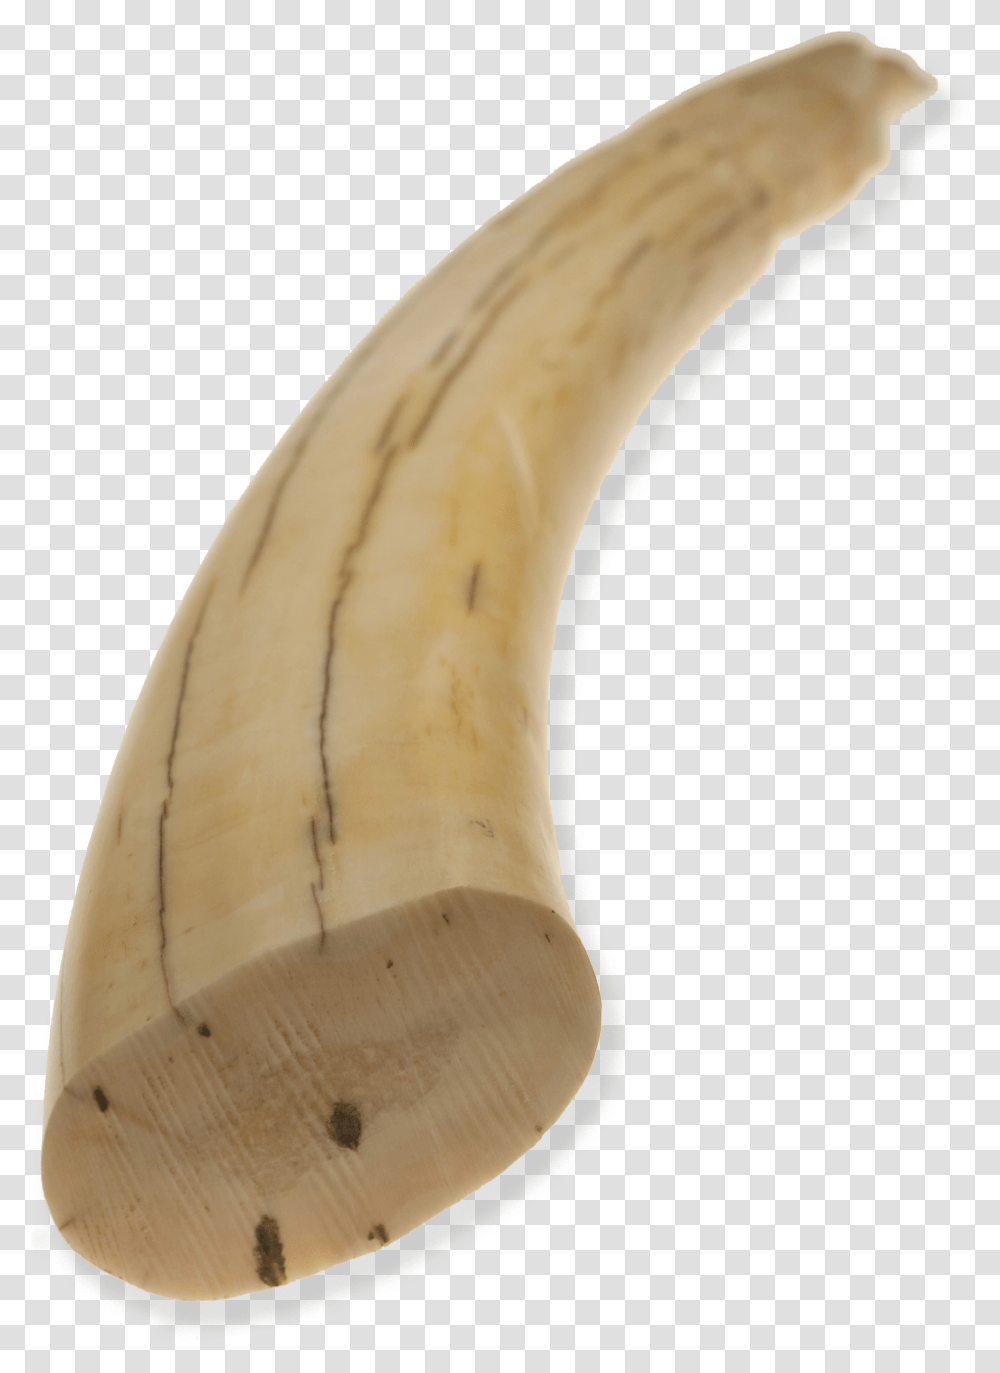 Hornwoodivory Walrus Tusk, Banana, Fruit, Plant, Food Transparent Png